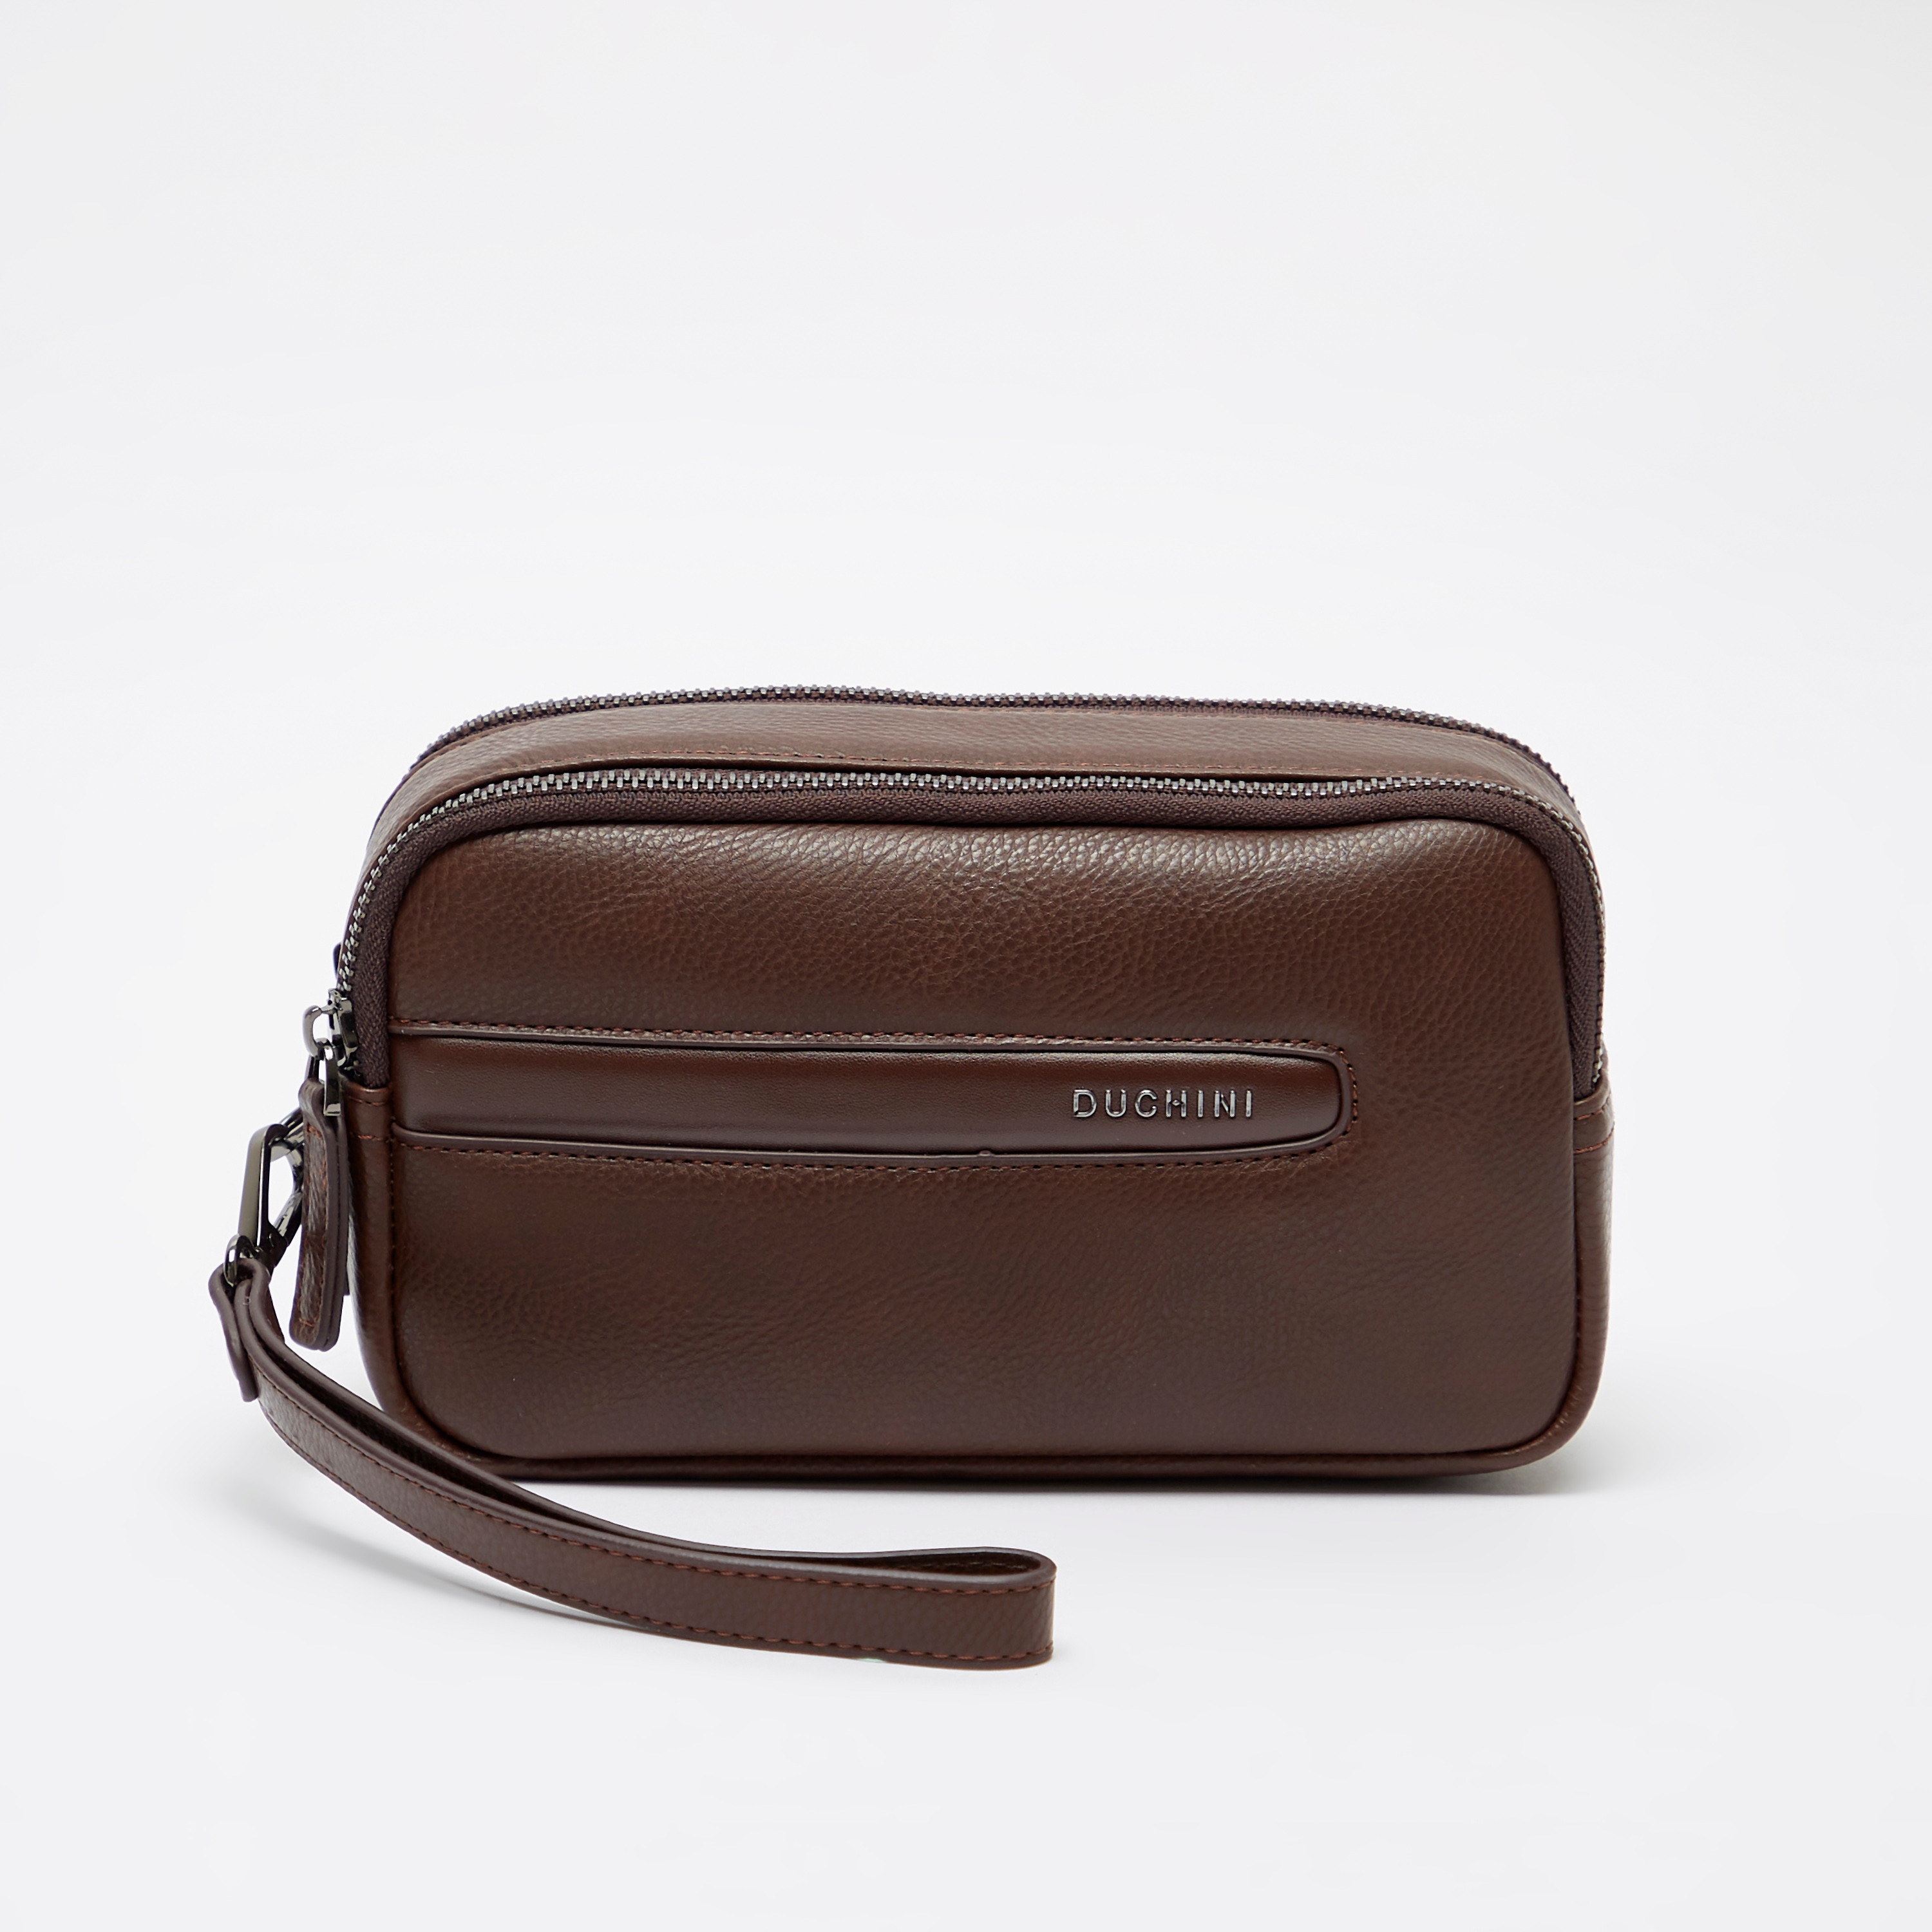 Buy Duchini Messenger Bag with Adjustable Strap and Zip Closure | Splash UAE